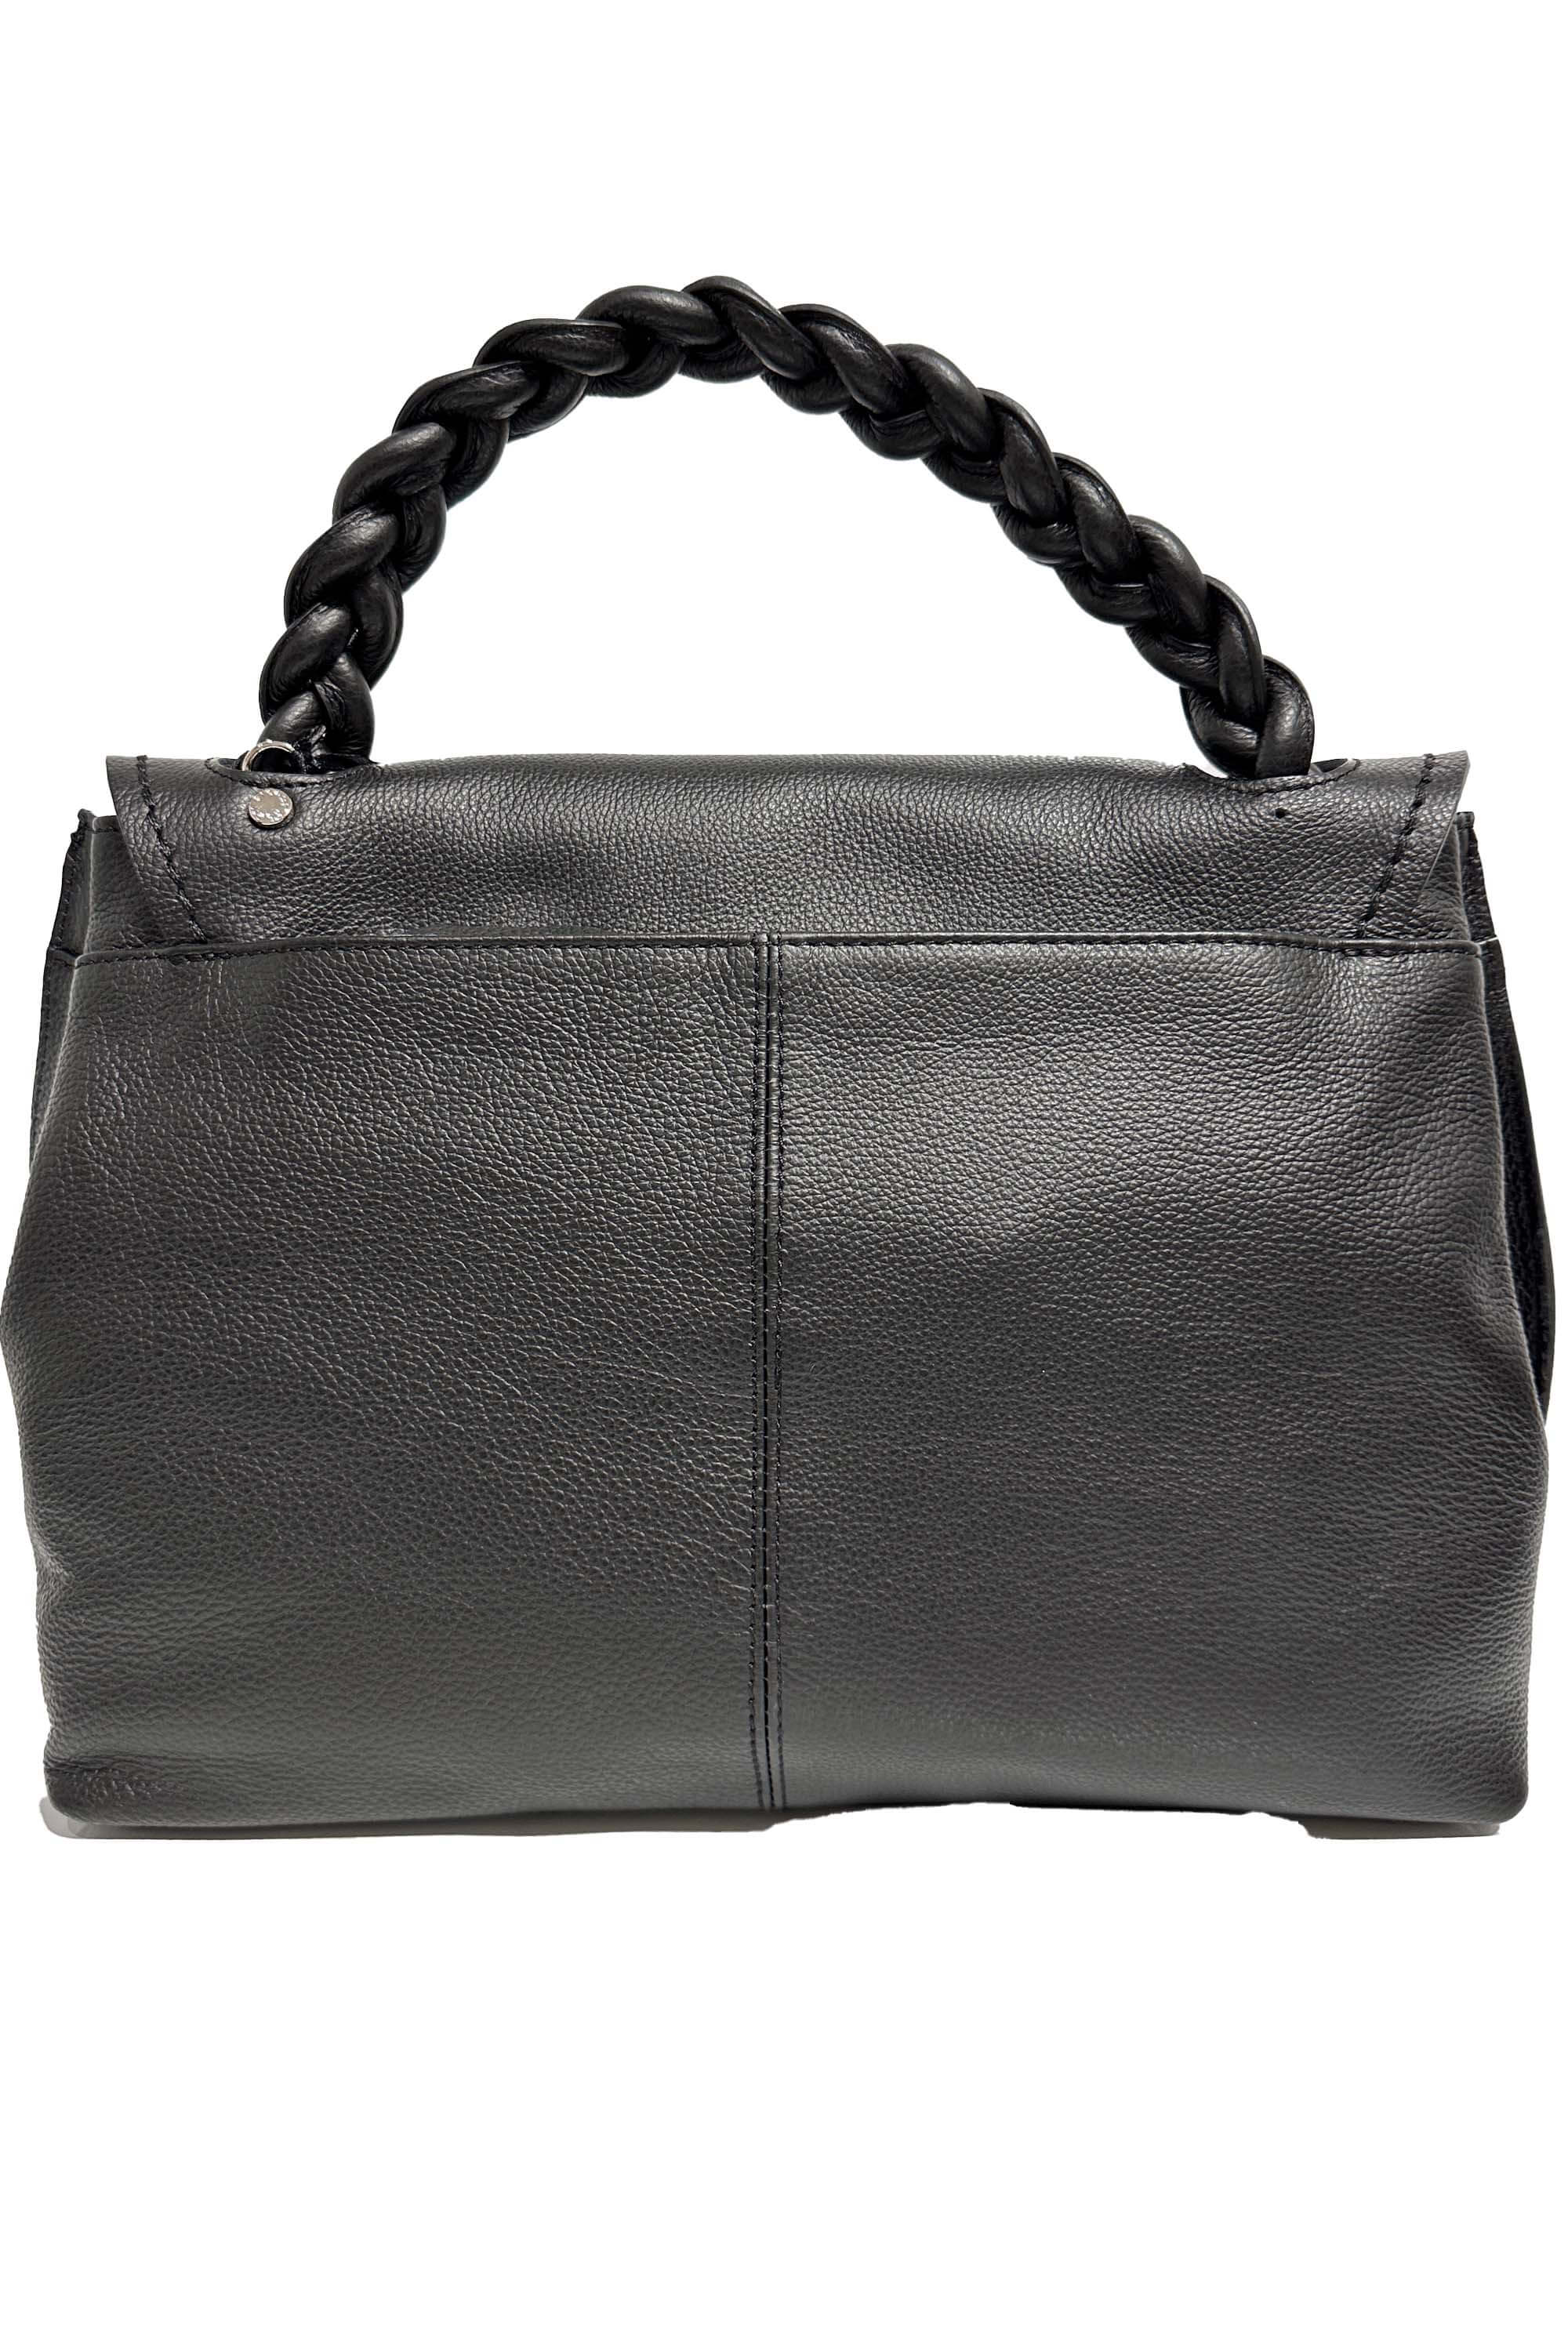 Gianni Conti Leather 4292 Black Bag